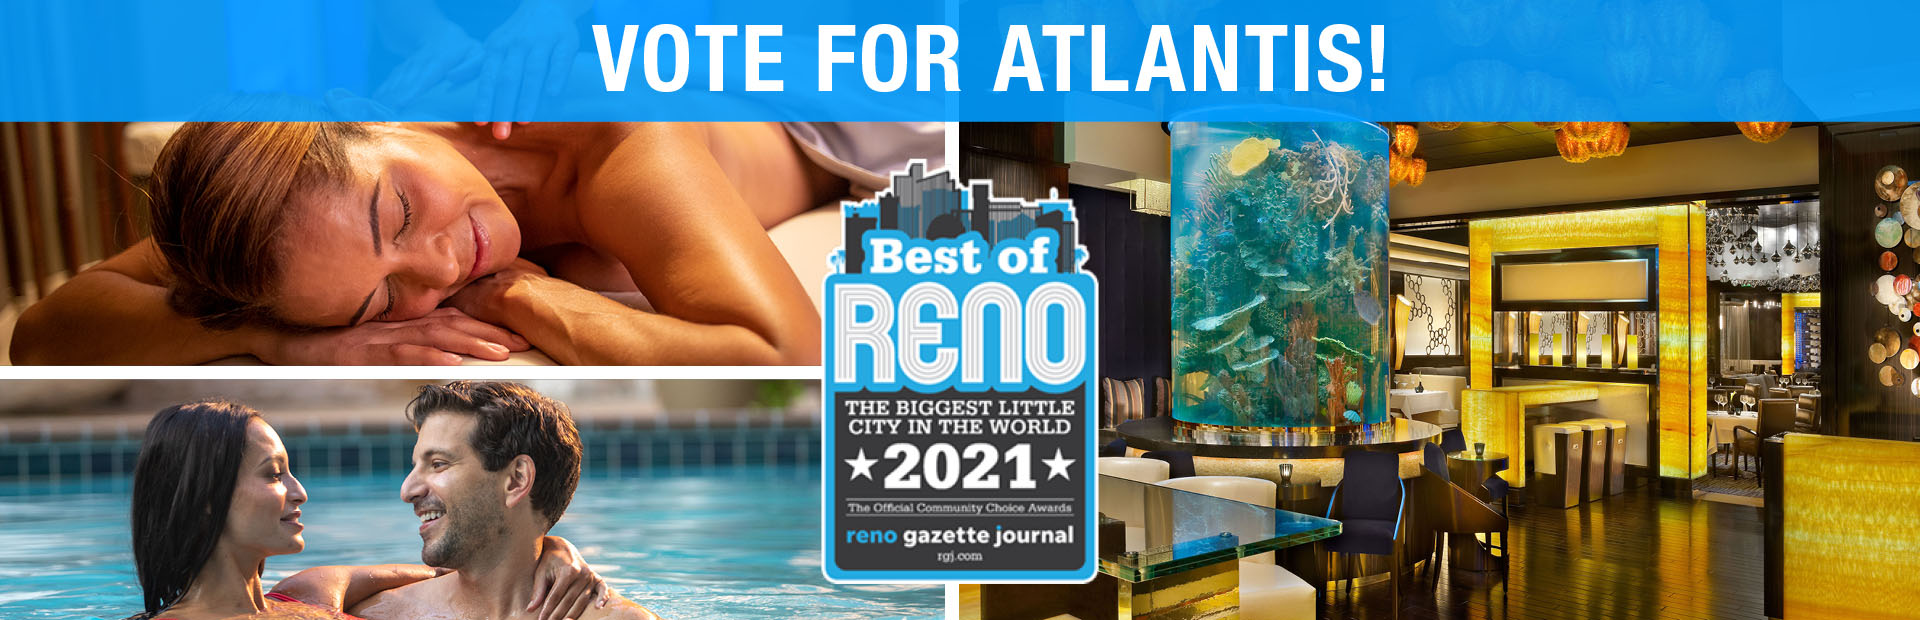 Vote Atlantis for Best Casino 2020